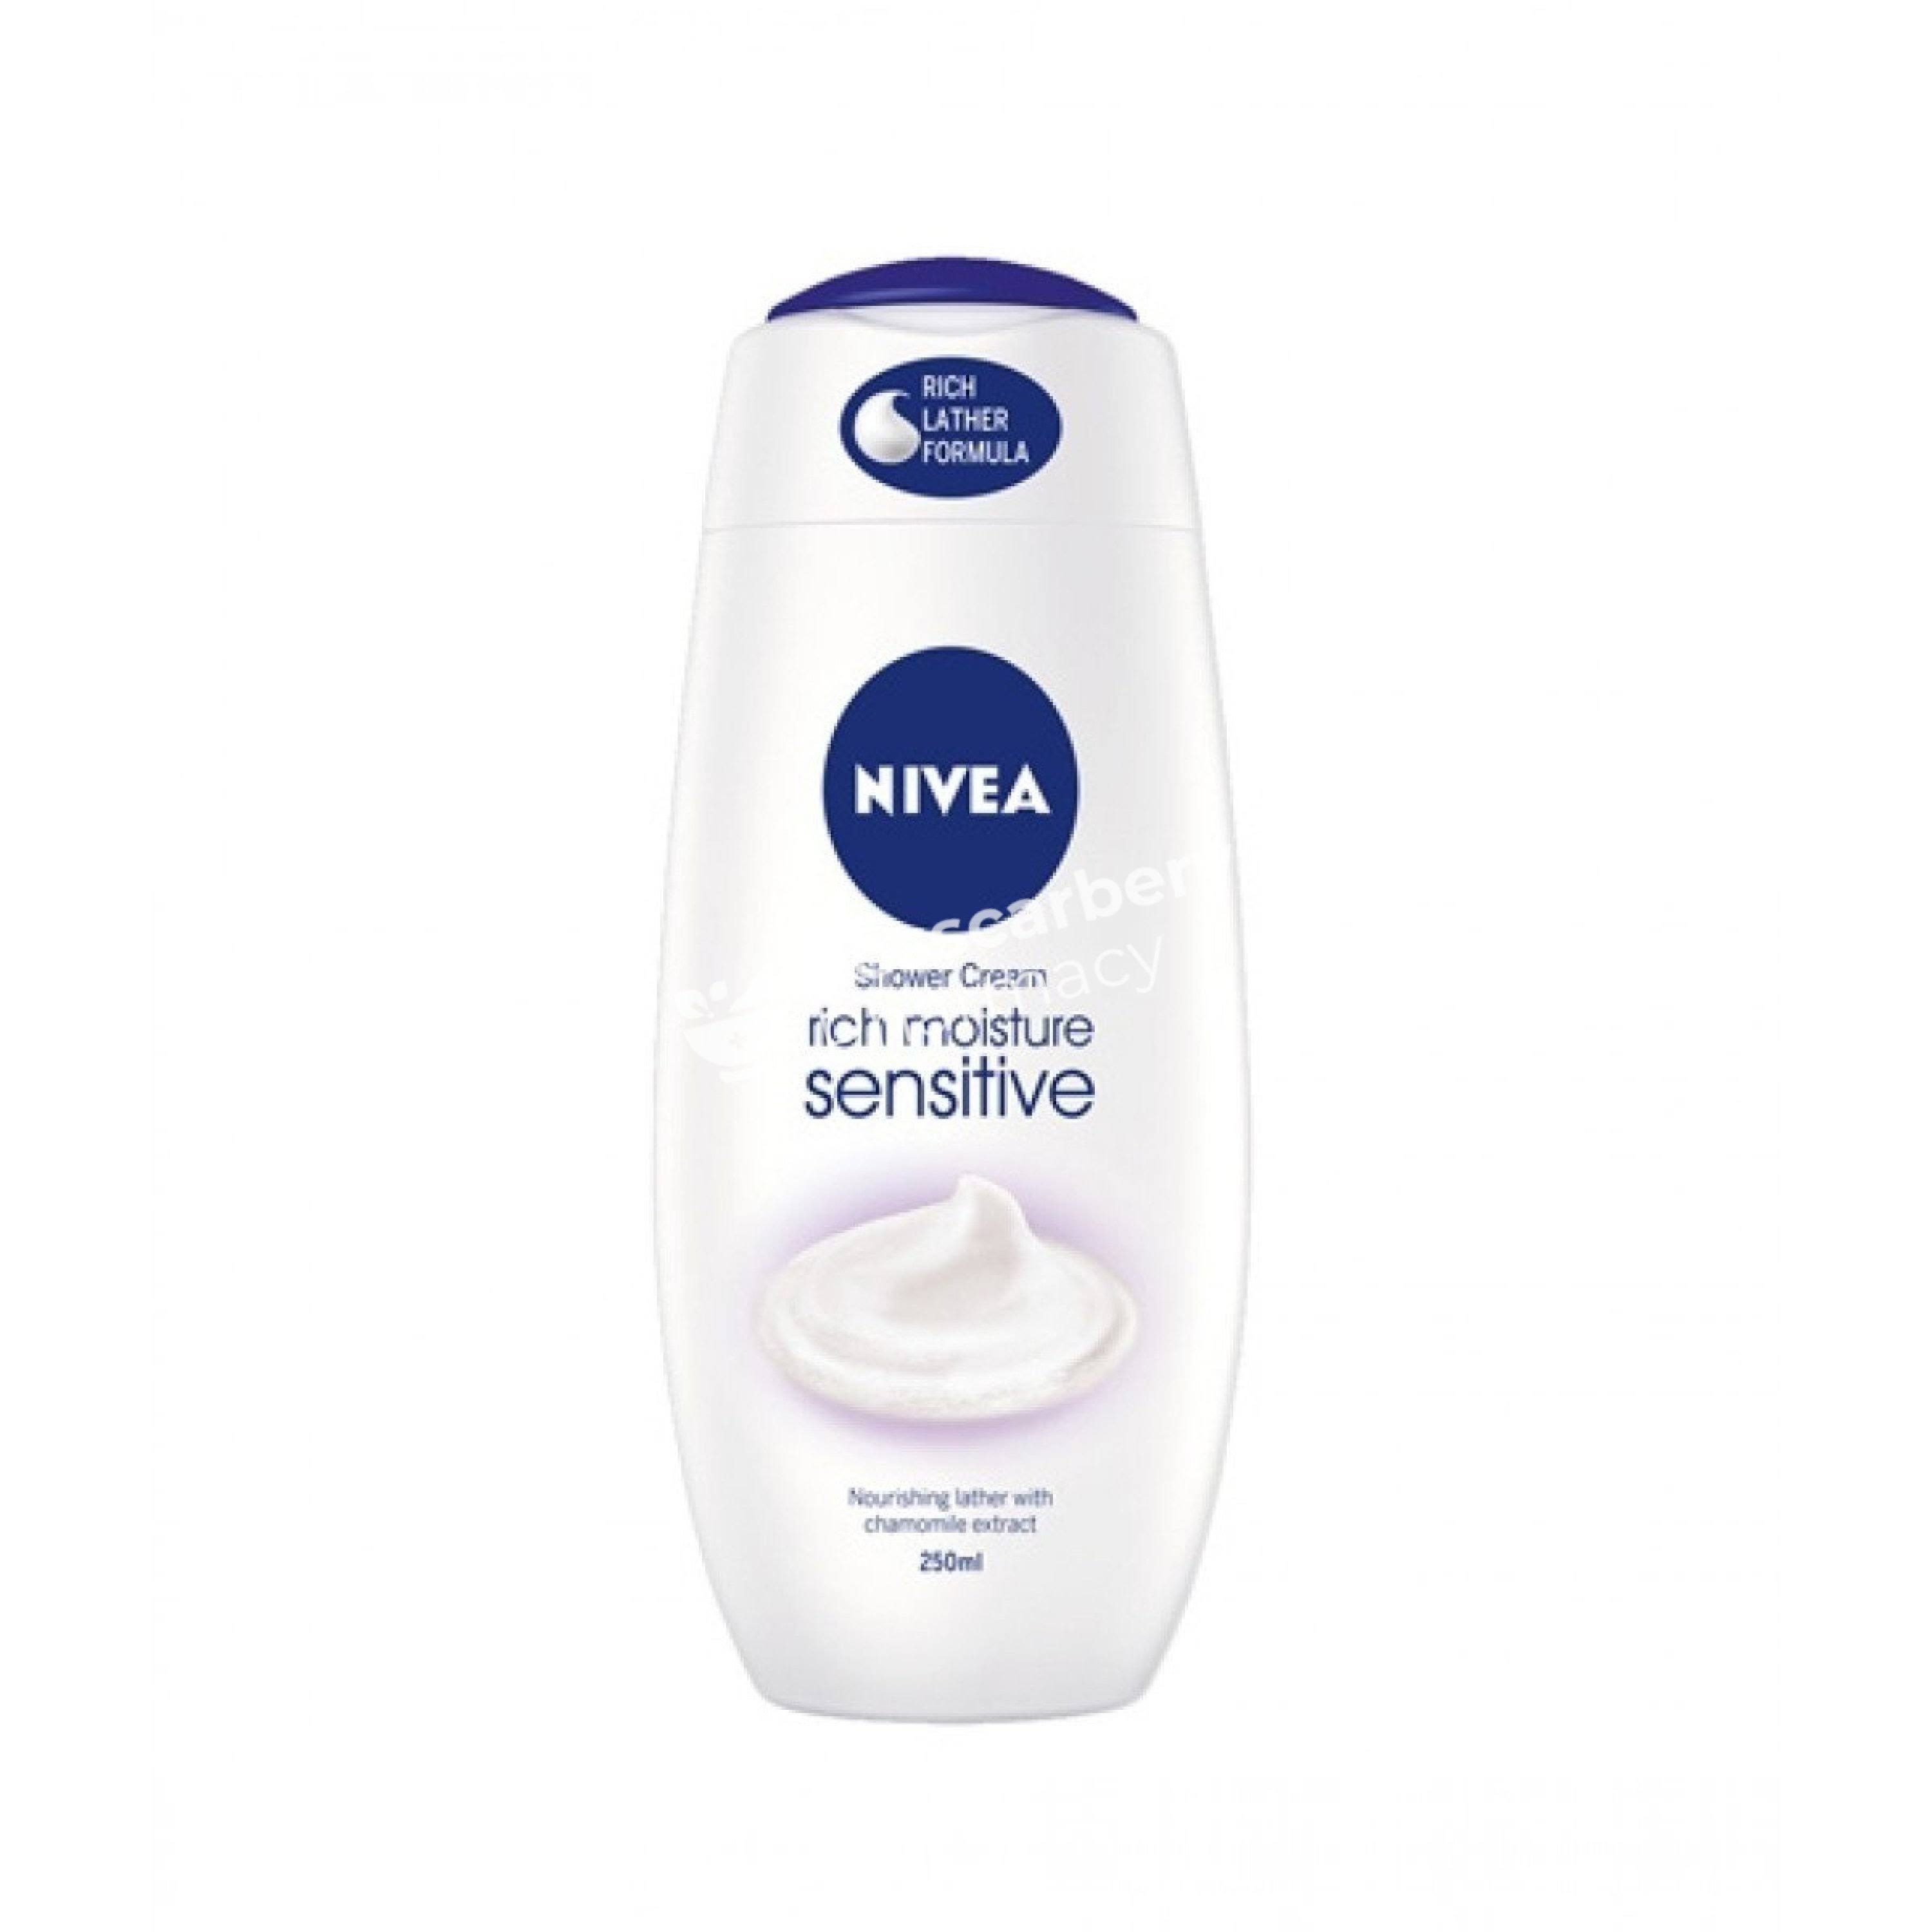 Nivea Caring Shower Cream Rich Moisture Sensitive - 250ml